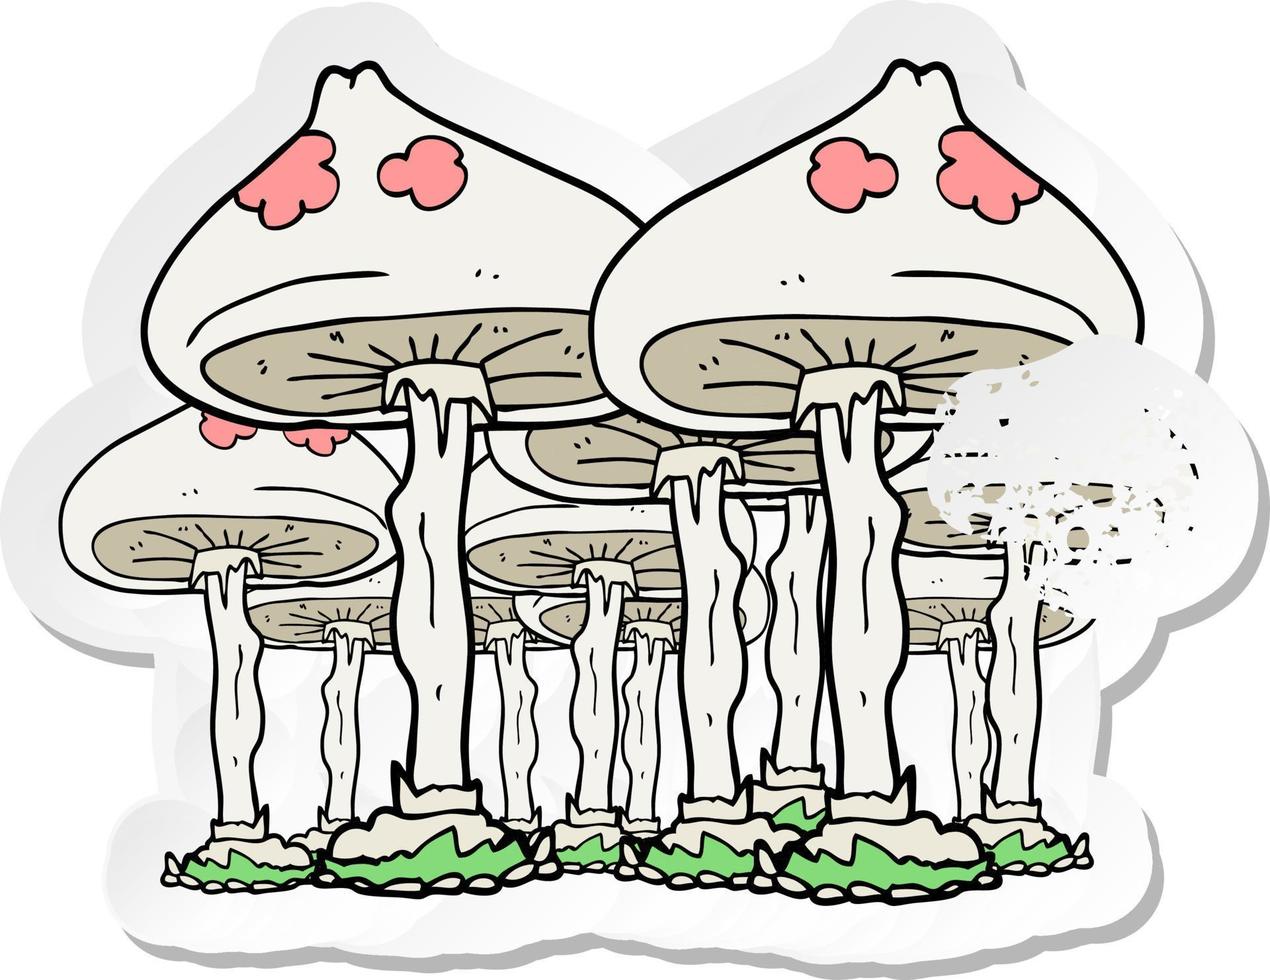 retro distressed sticker of a cartoon mushrooms vector